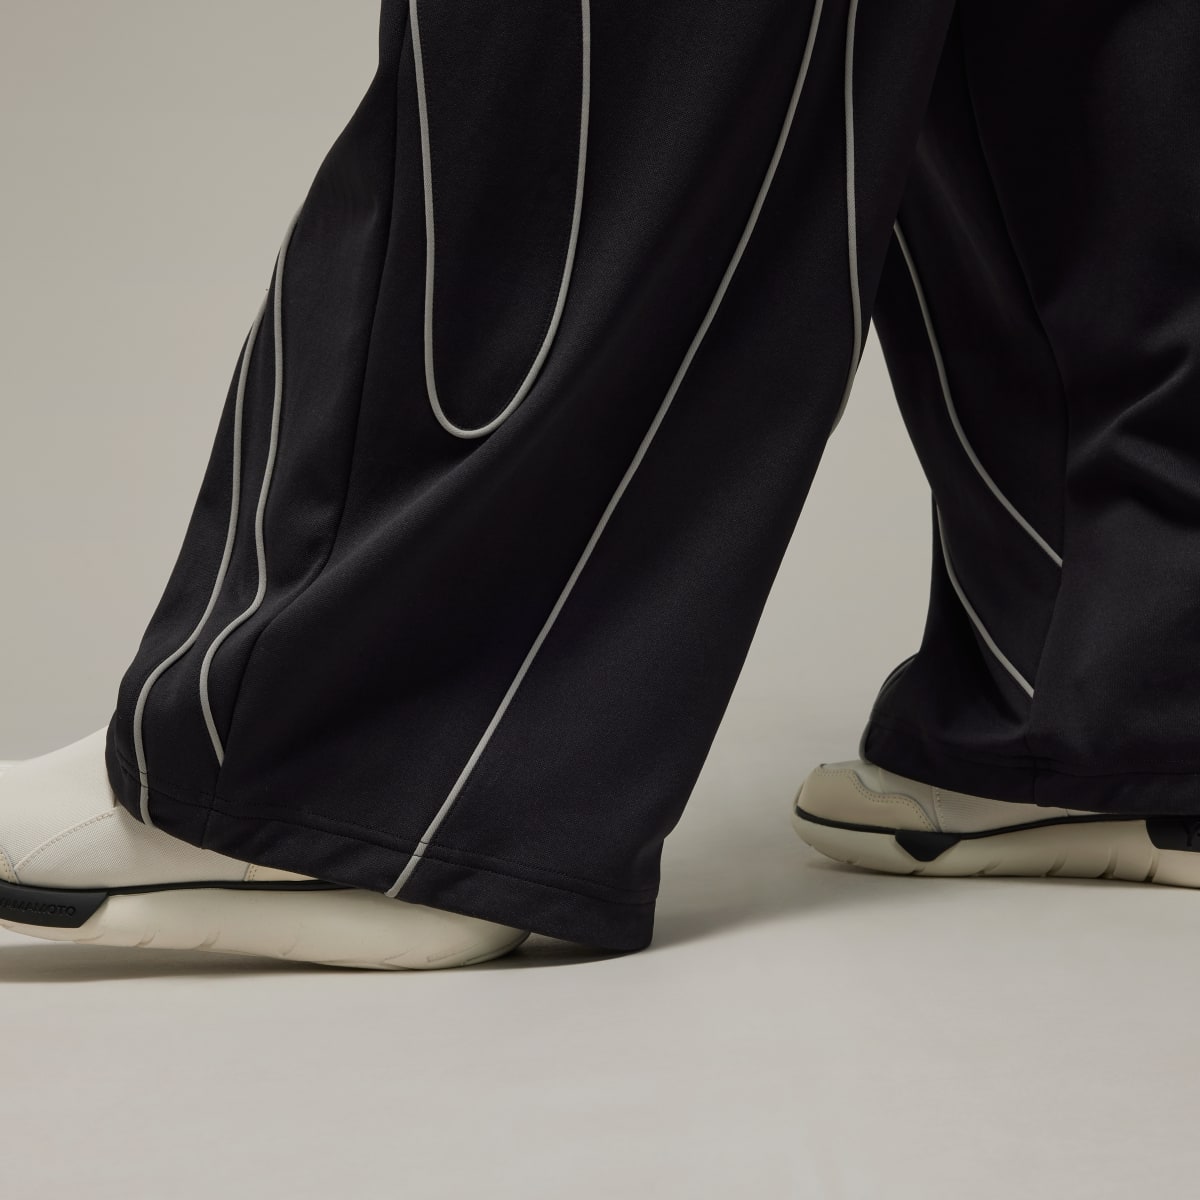 Adidas Y-3 Track Pants. 7